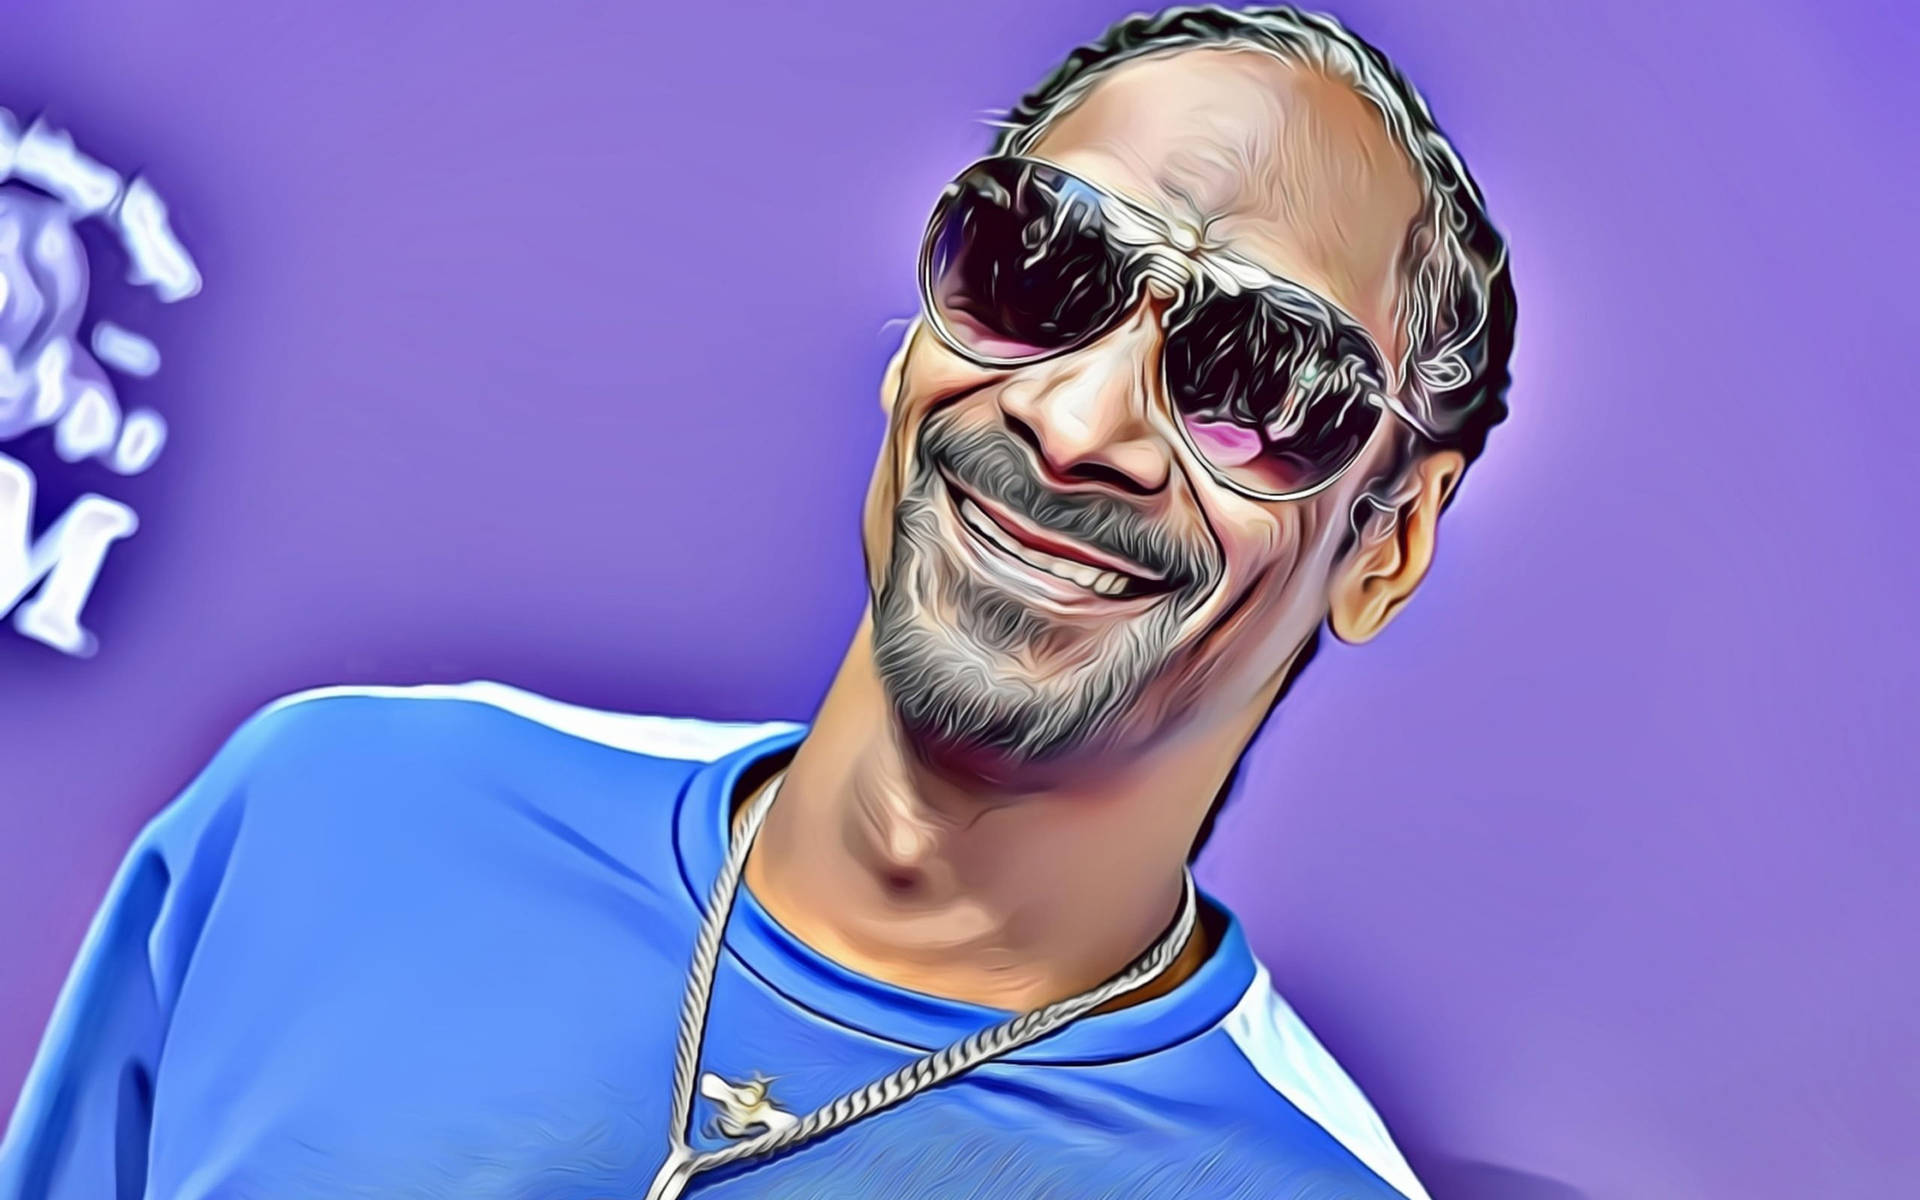 Snoop Dogg Graphic Artwork Wallpaper